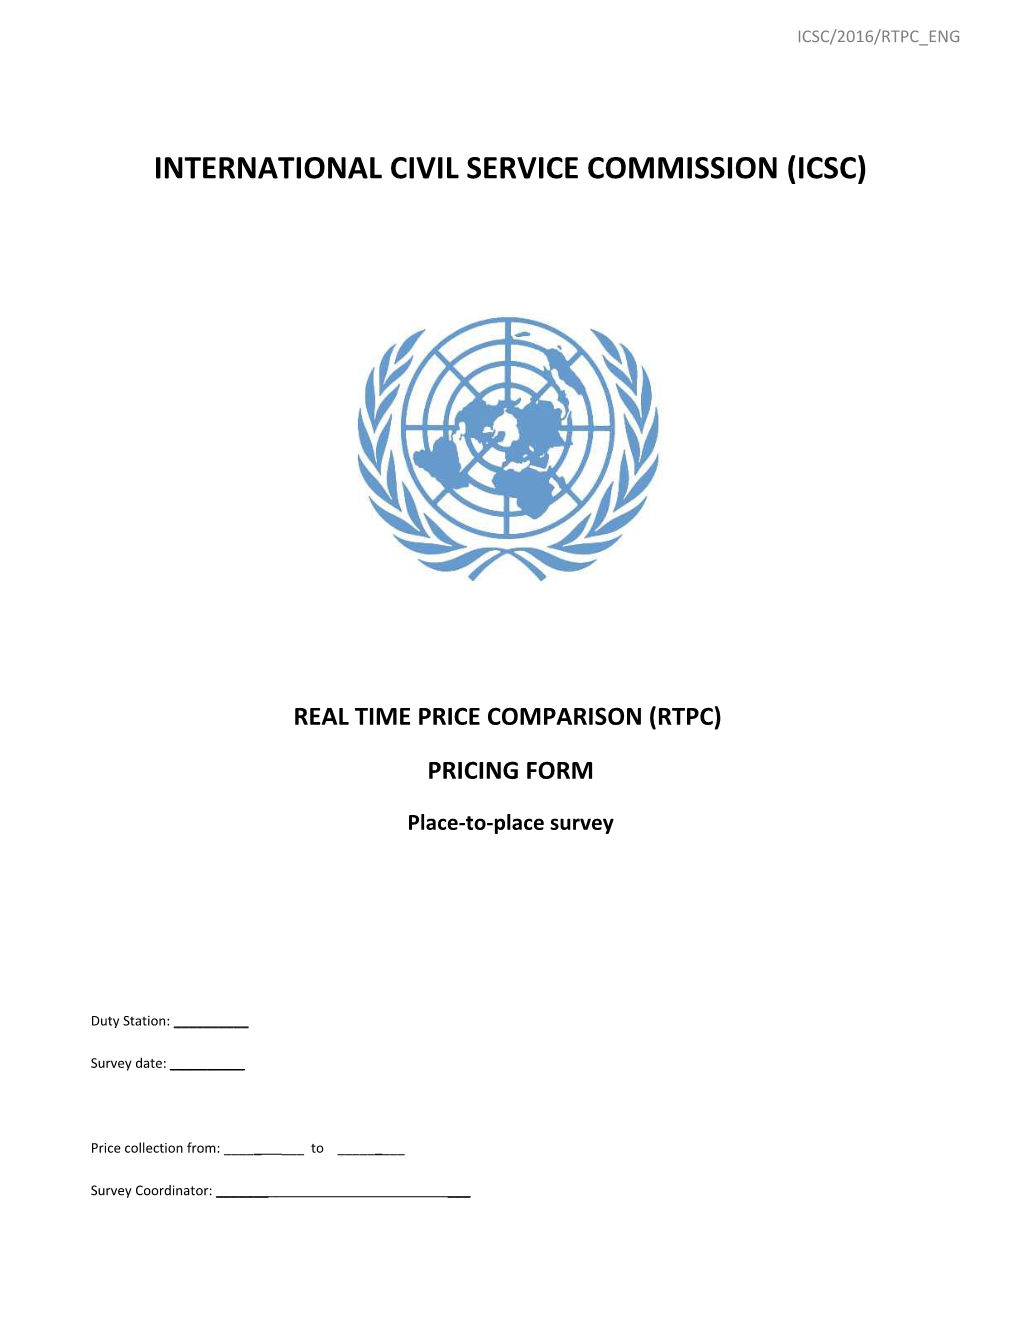 International Civil Service Commission (Icsc)